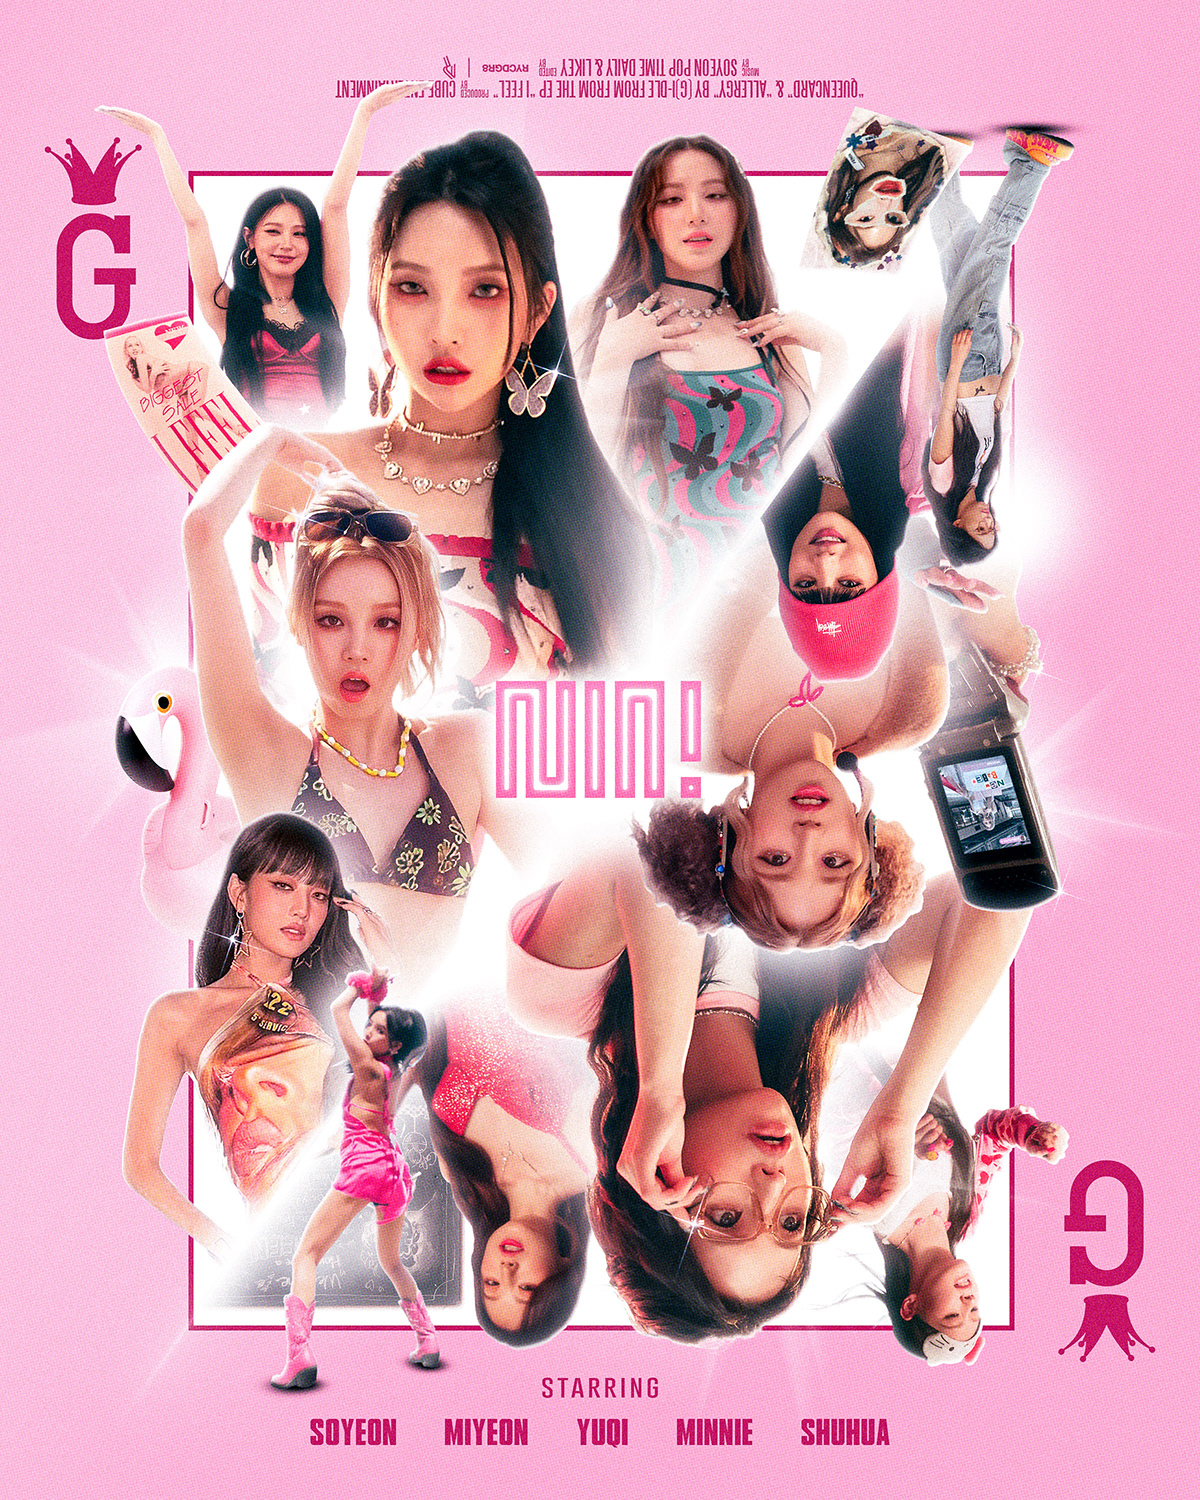 Gidle kpop Poster Design kpop poster kpop fanart album art album cover